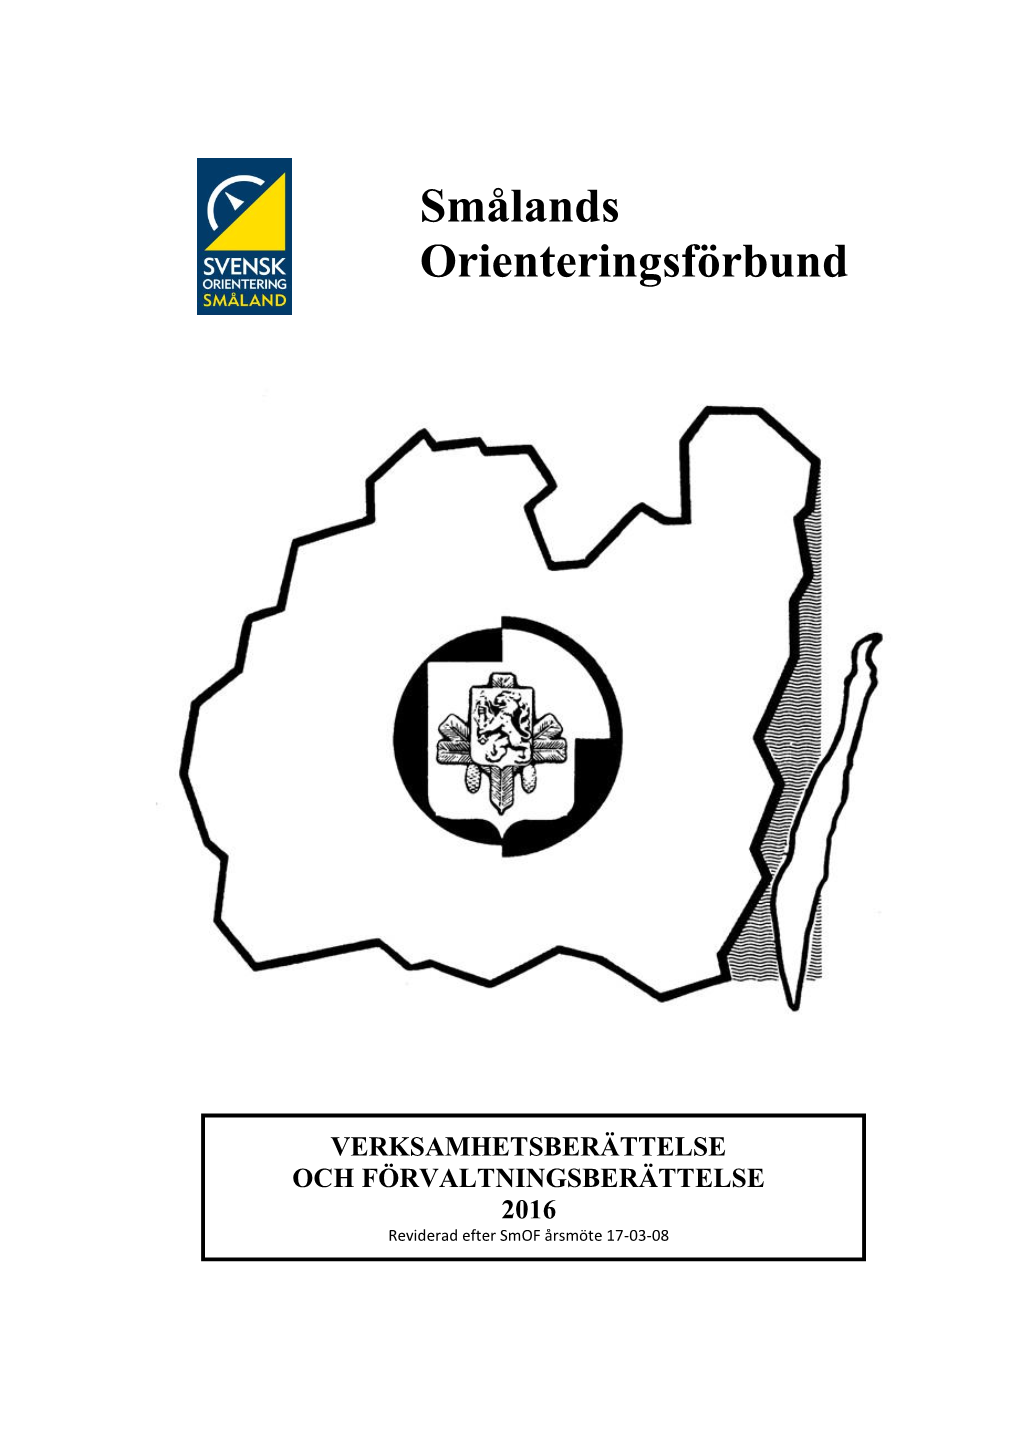 Smålands Orienteringsförbund